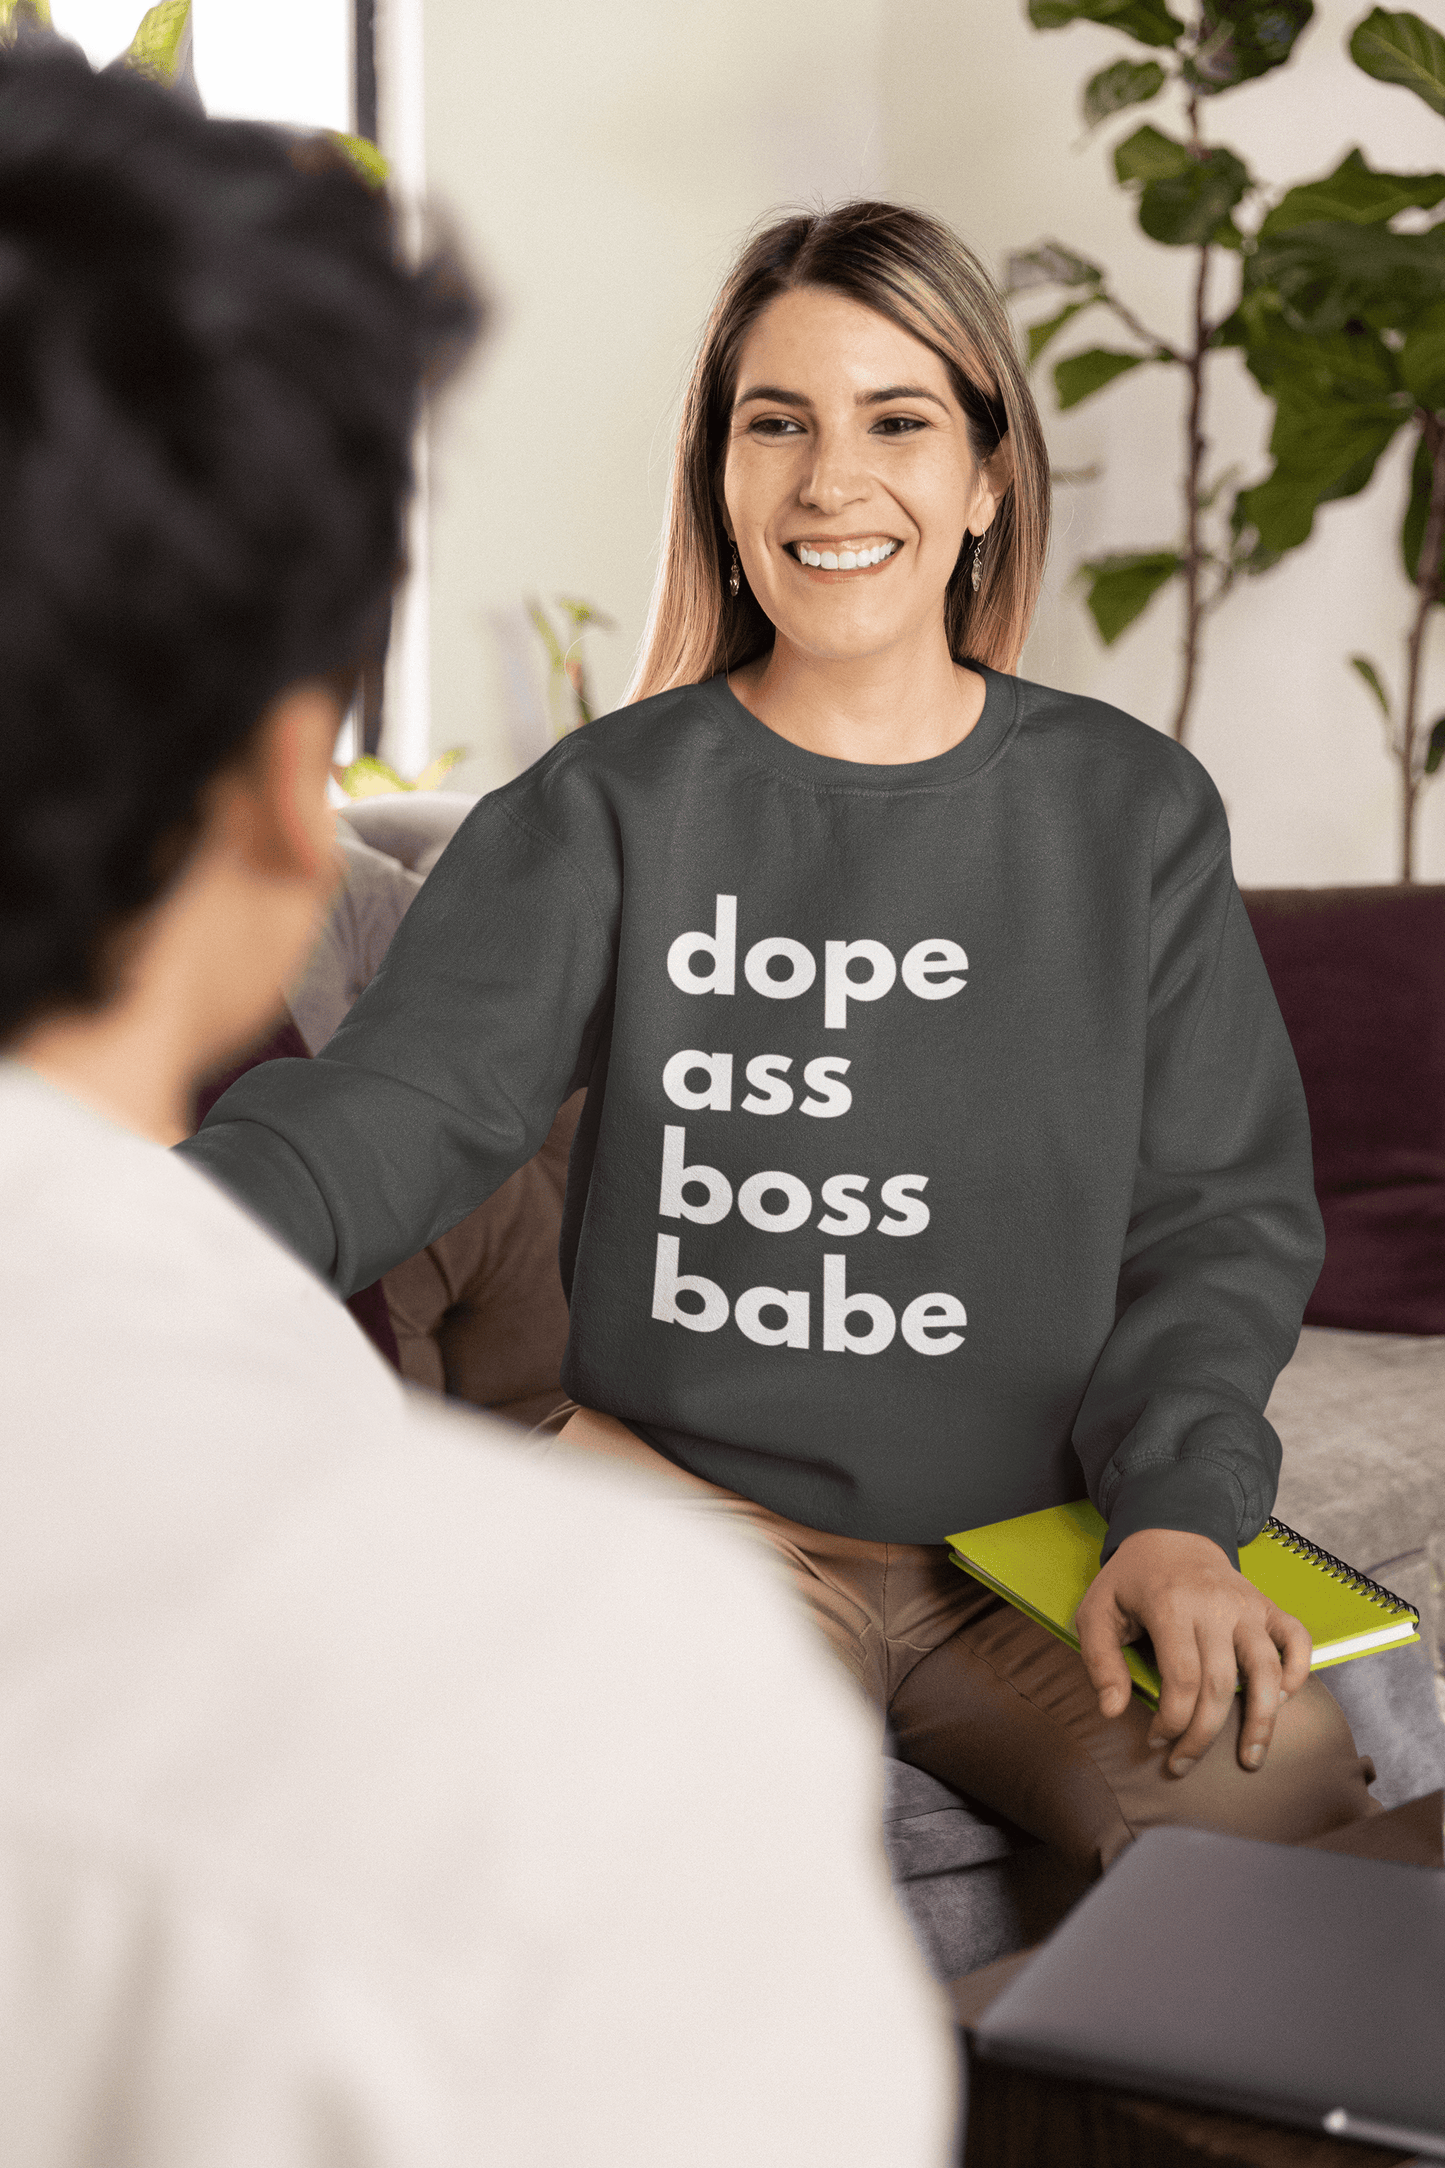 Dope Ass Boss Babe Pullover